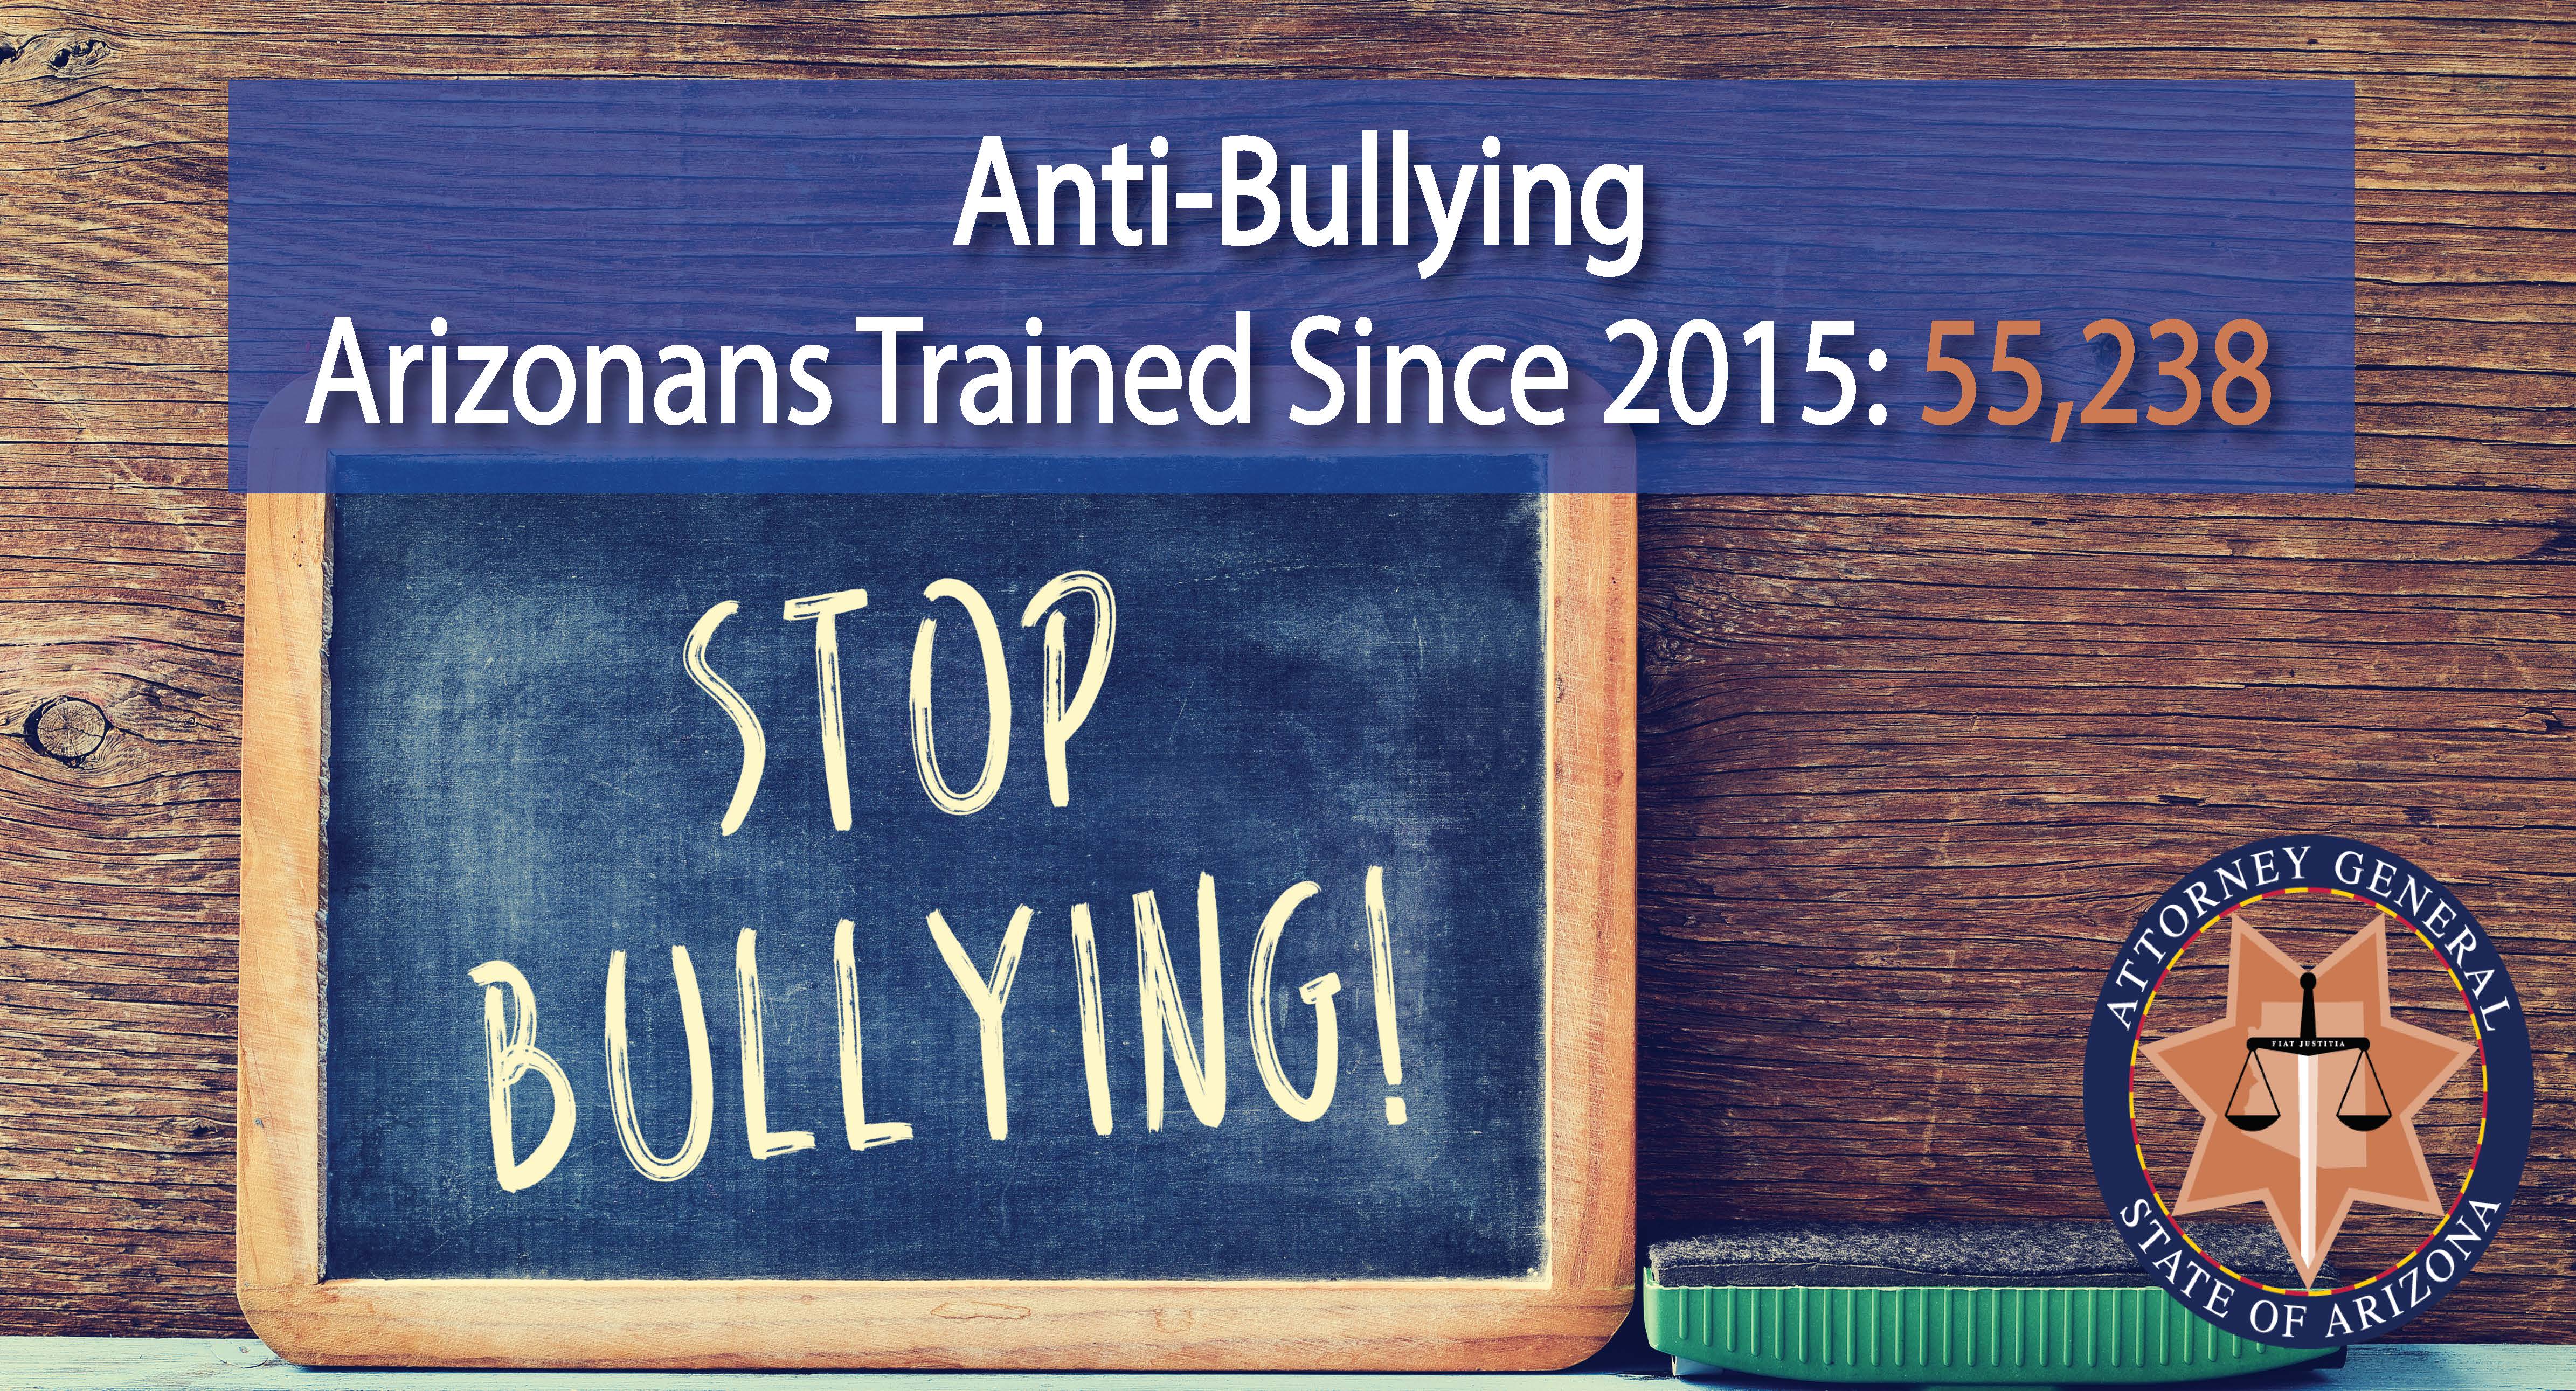 Banner showing that 49,846 Arizonans have received Anti-Bullying Training